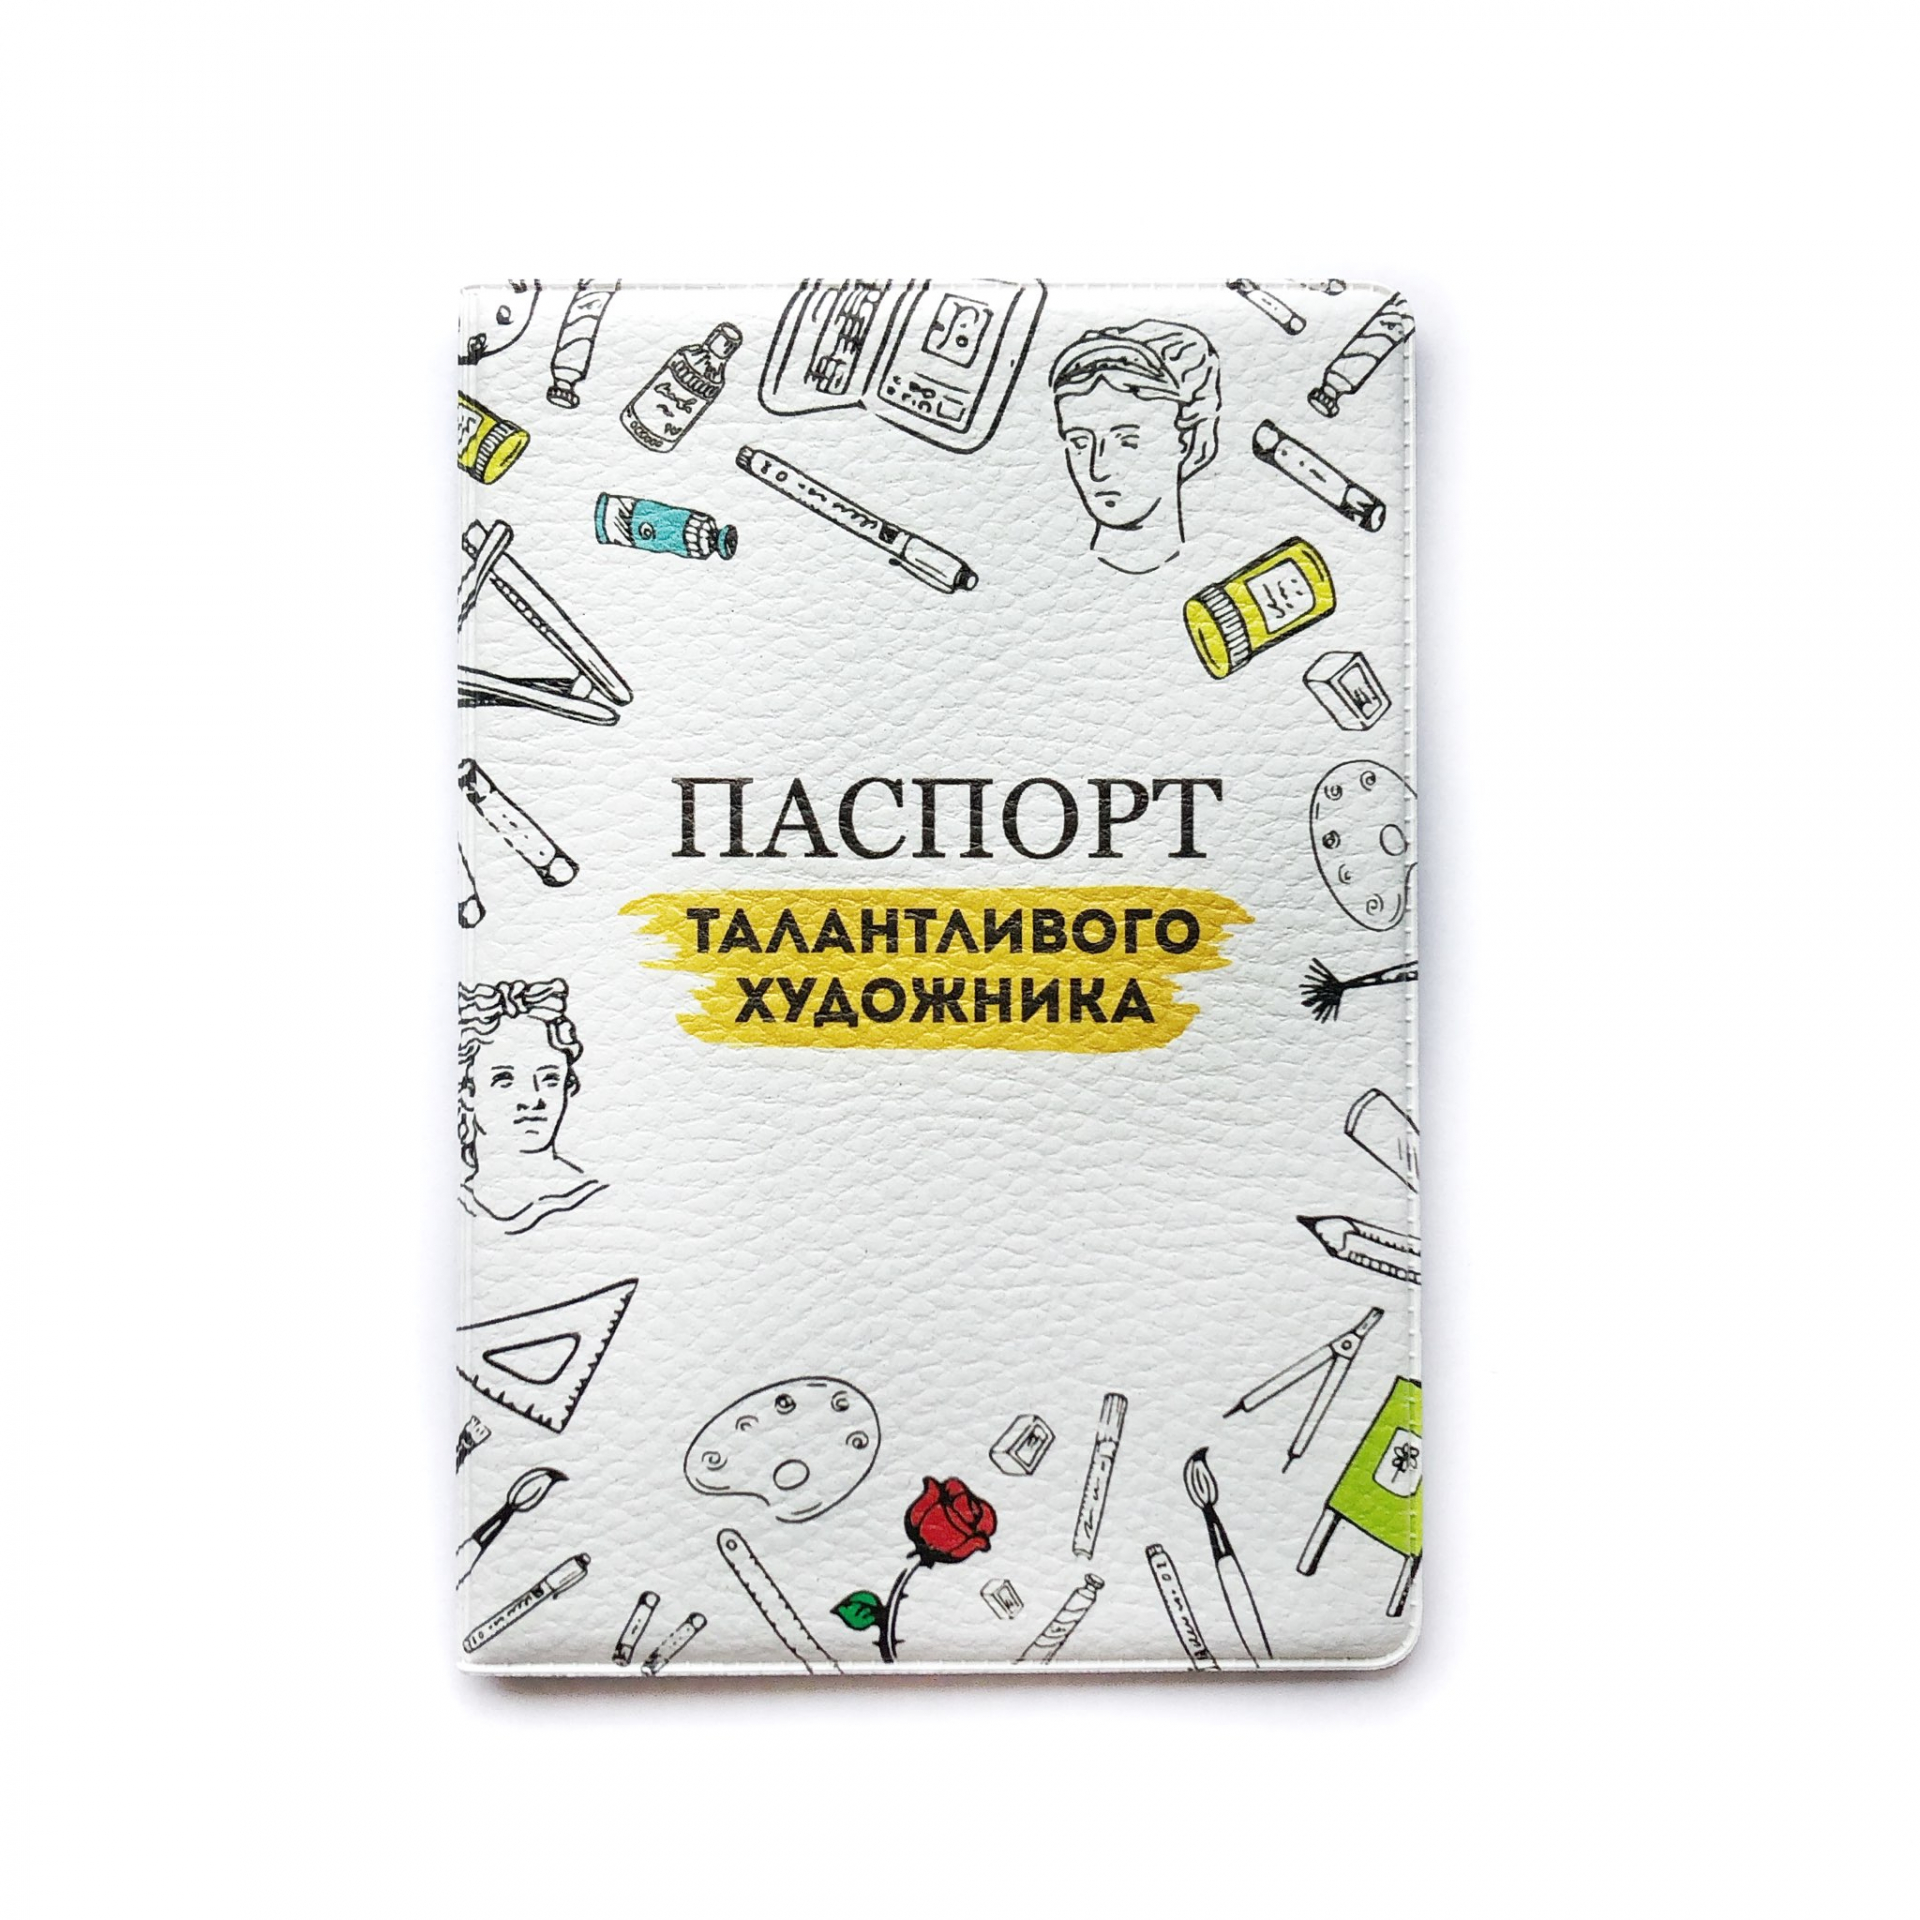 Скрапбукинг-обложка на паспорт - мк